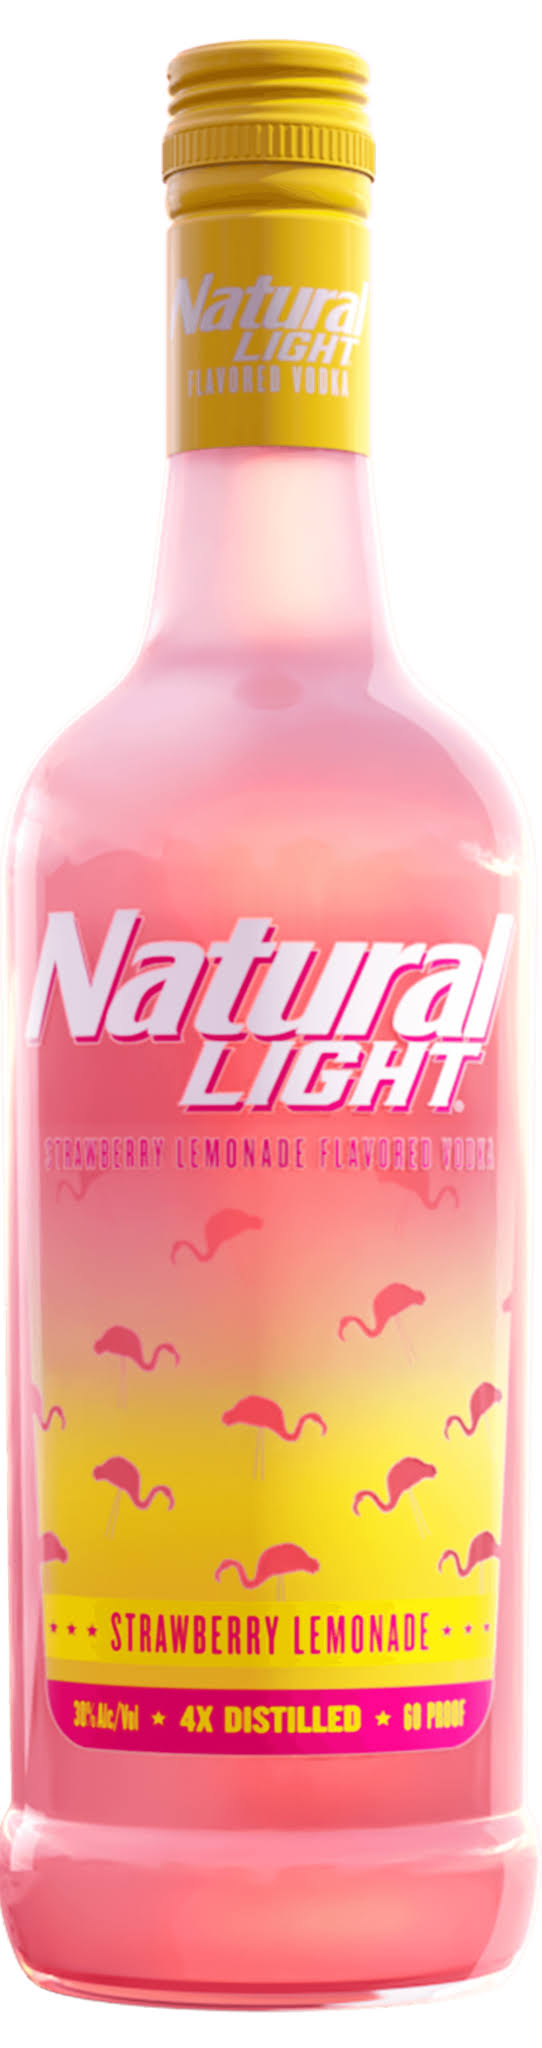 Natural Light Strawberry Lemonade Flavored Vodka 750ml